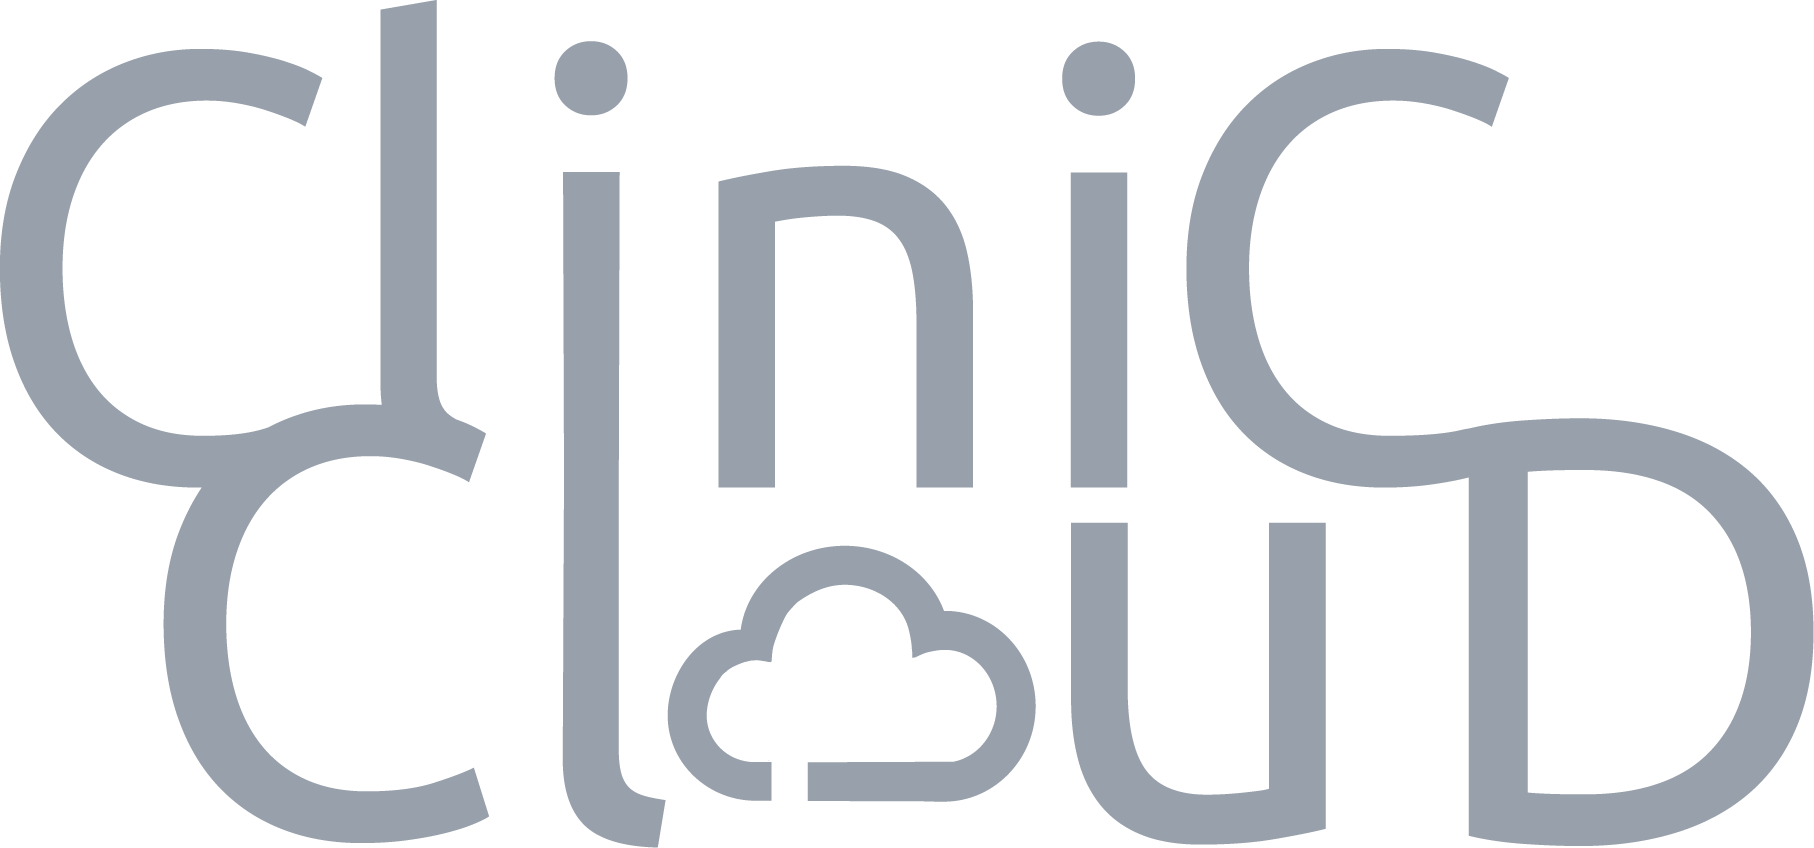 logo-clinic-cloud-grey